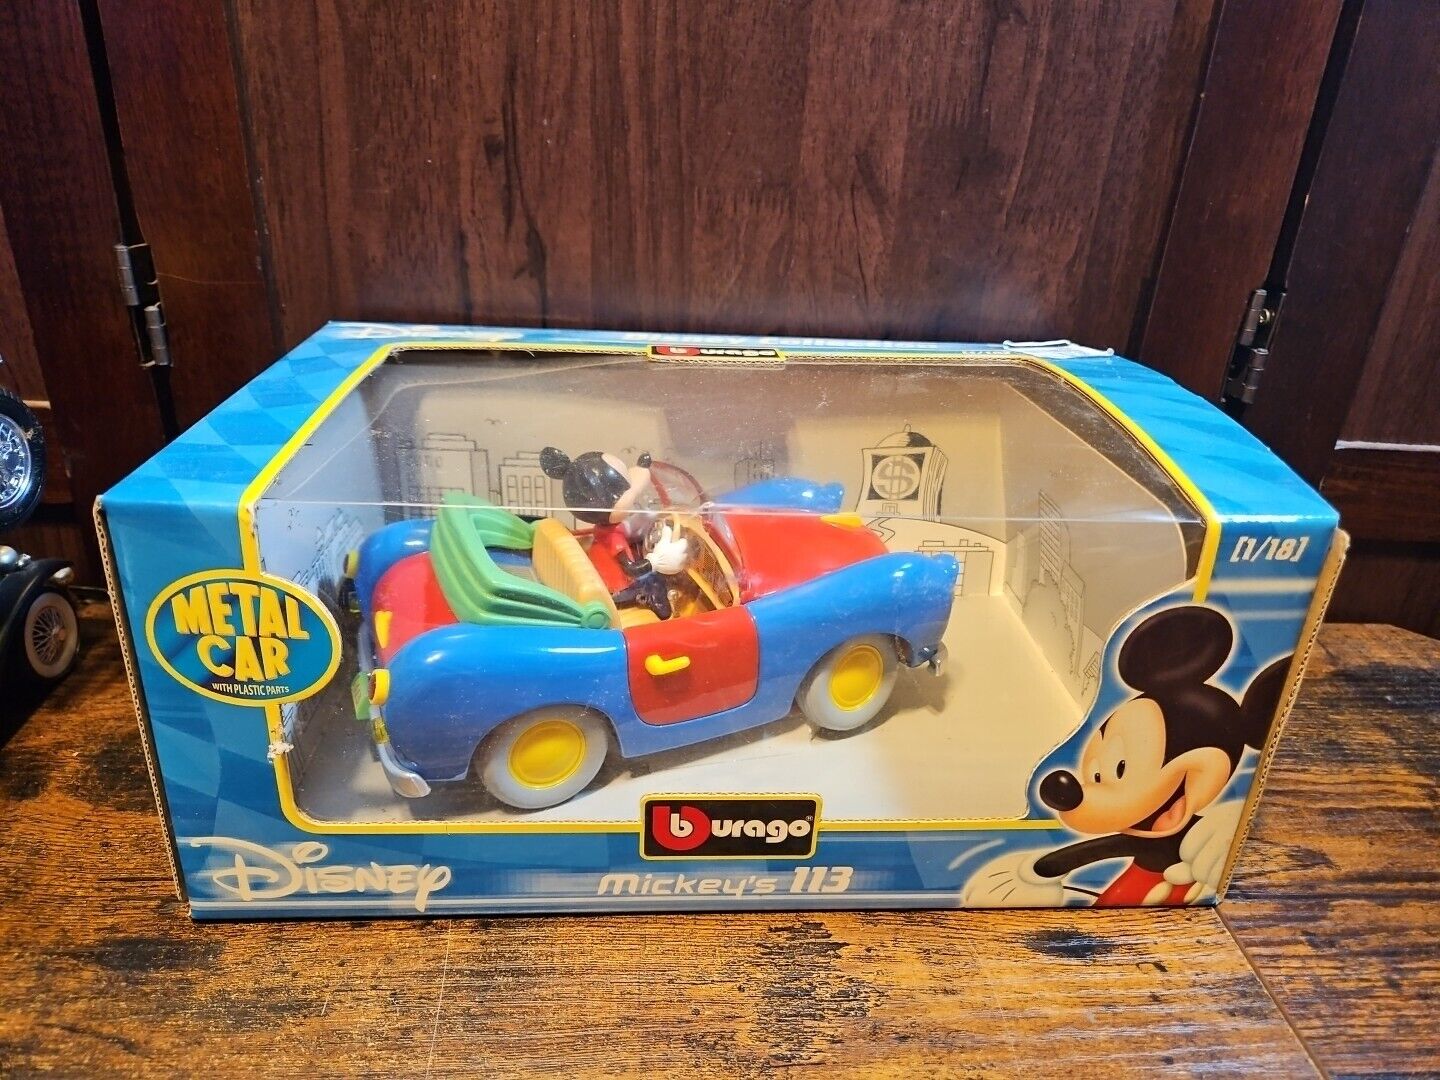 NIB Burago 1:18 Disney Mickey Mouse Metal Red & Blue Car Mickey’s 113 Open Box 